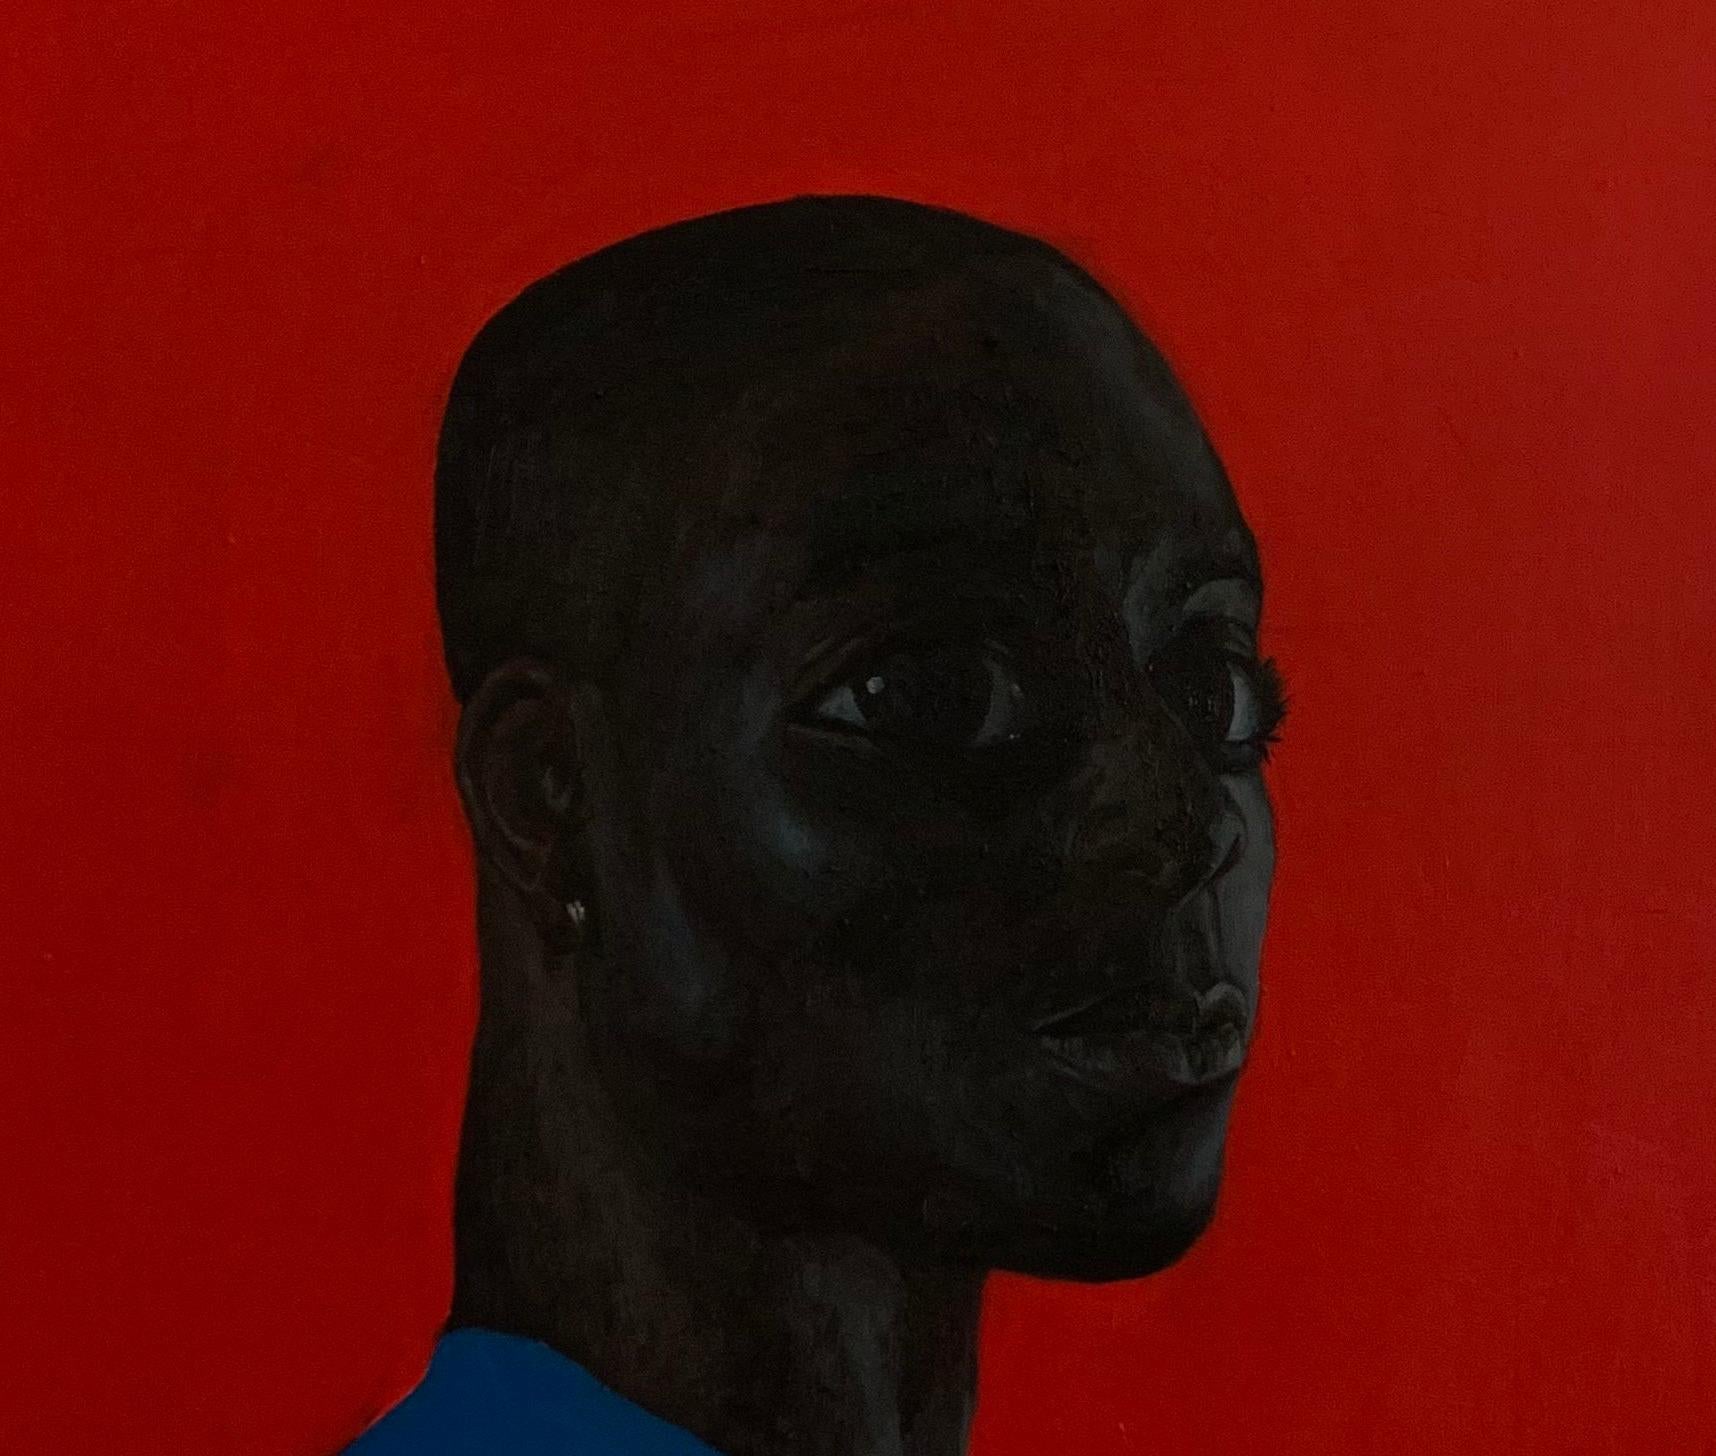 Ojulari I - Painting by Emmanuel Ojebola